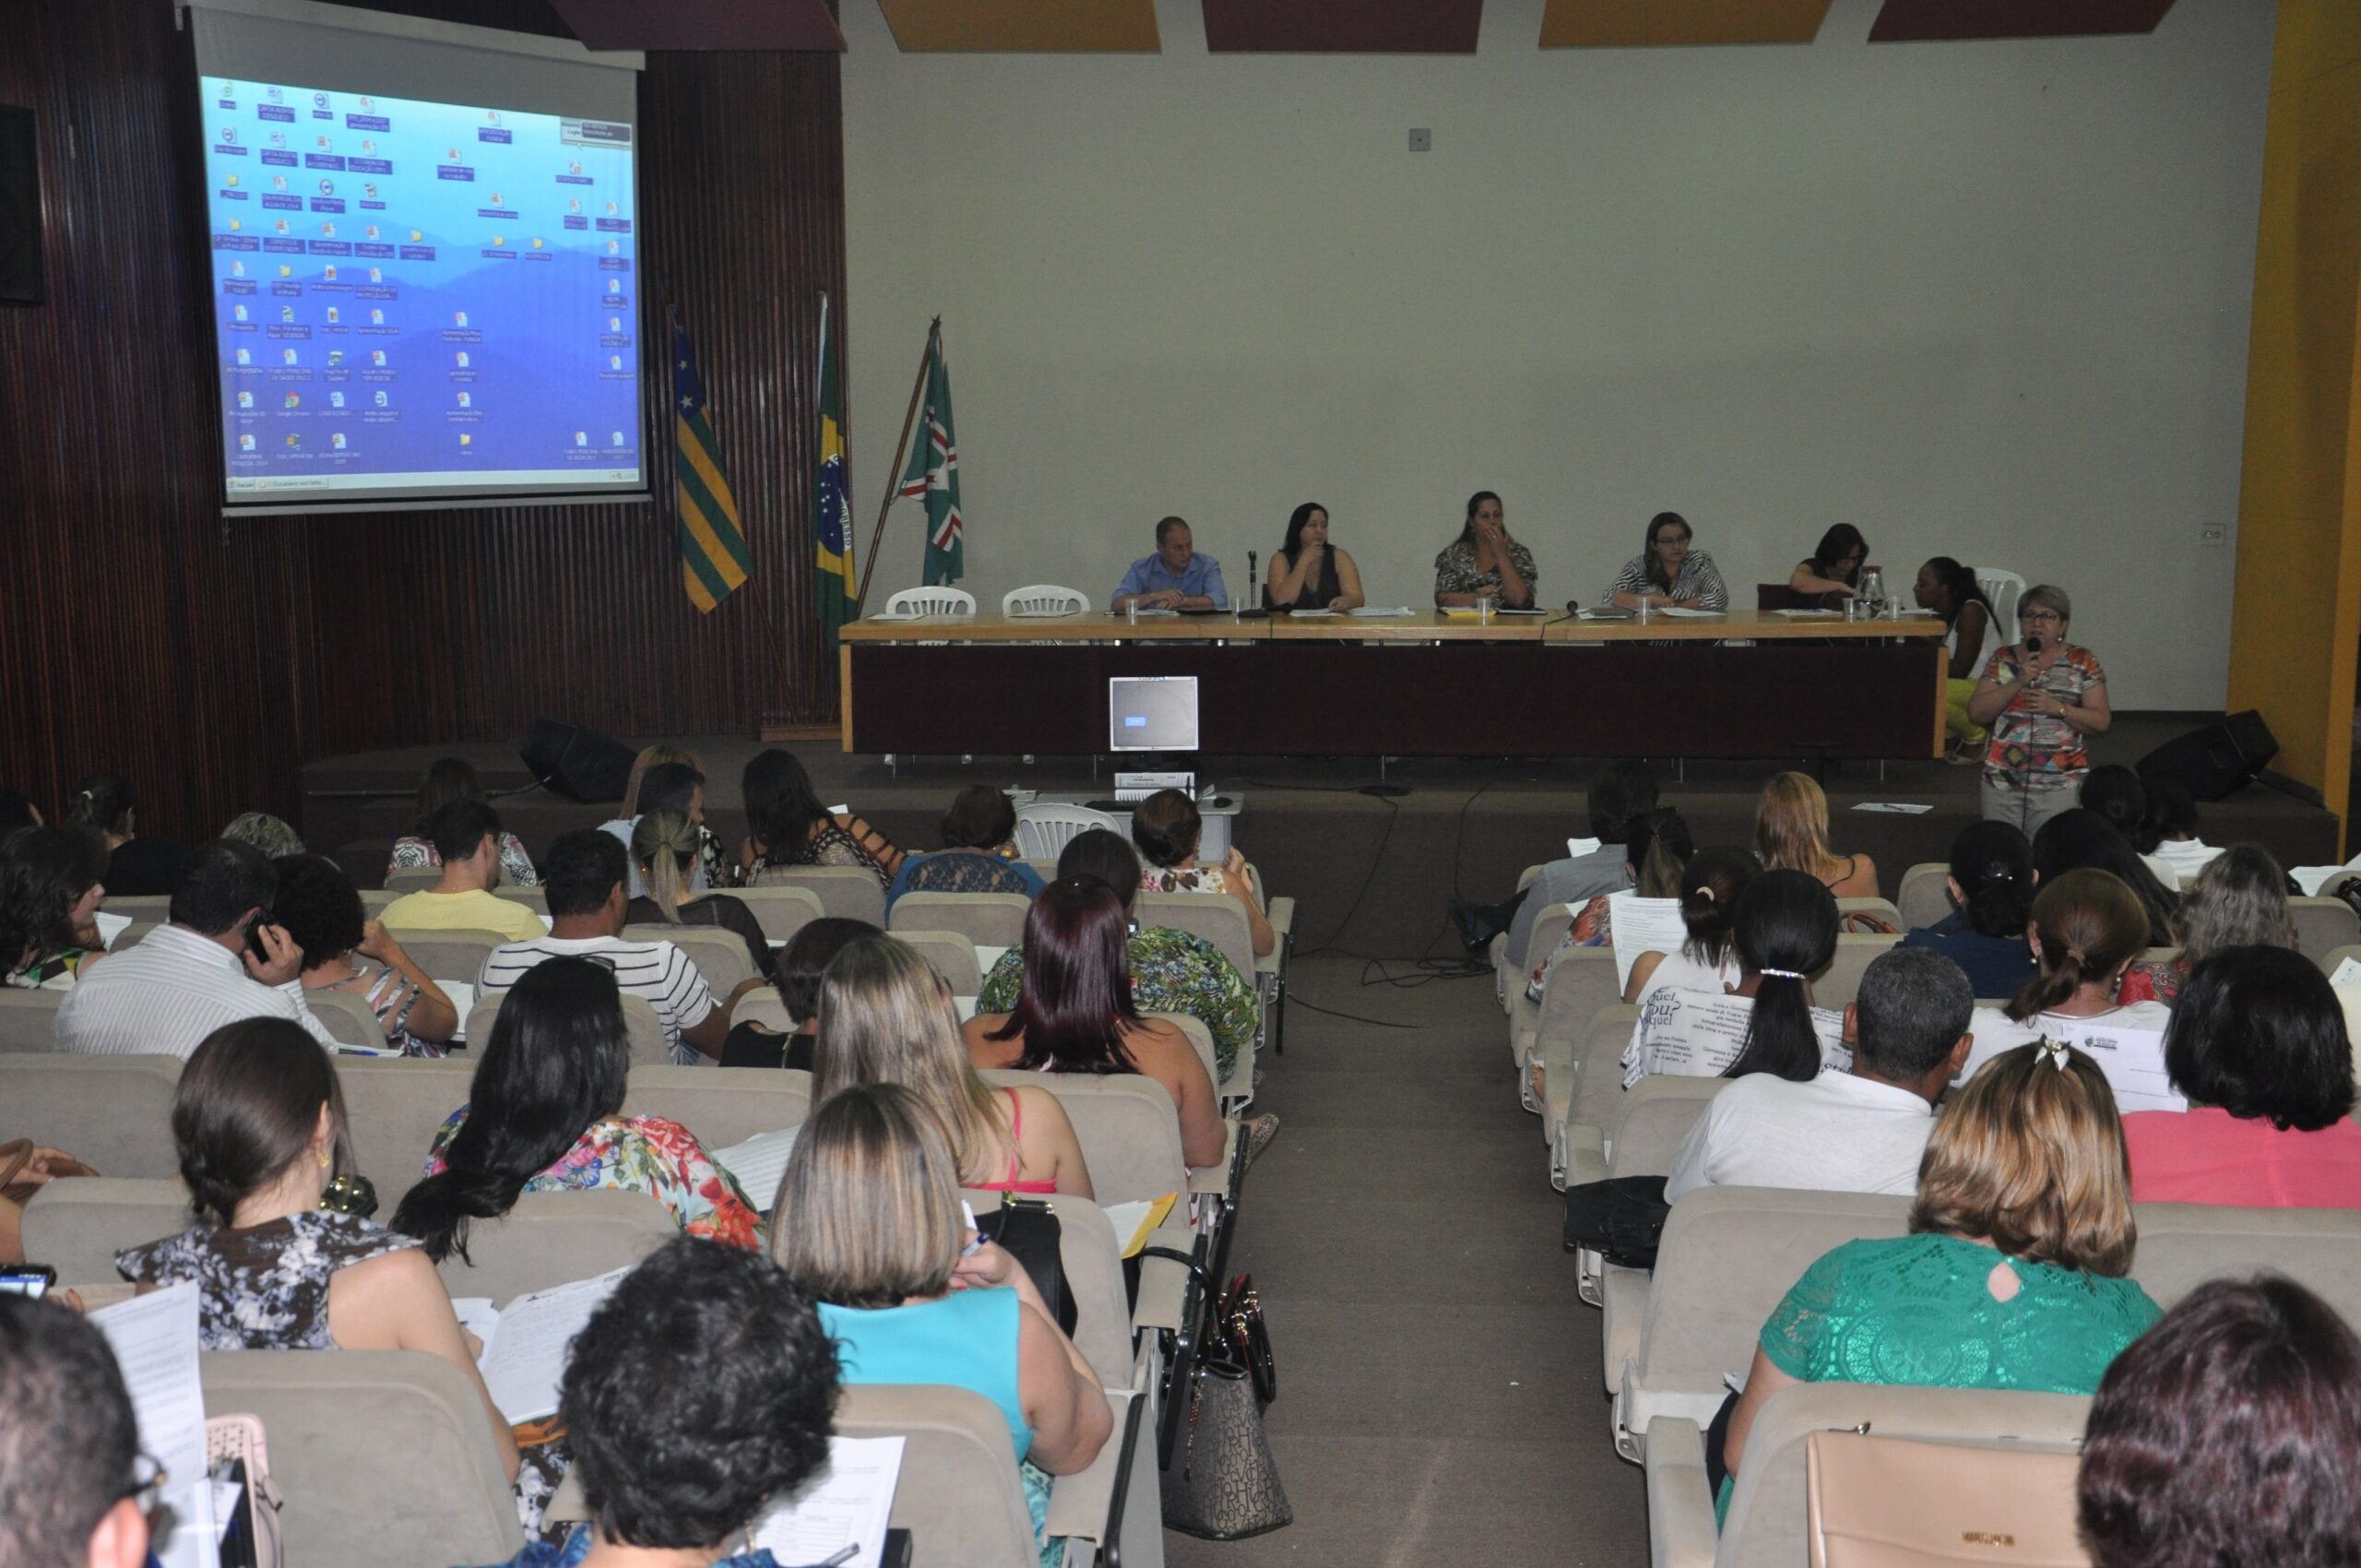 O Presidente do Conselho Estadual de Saúde Goiás participa da Assembléia Geral do COSEMS/GO